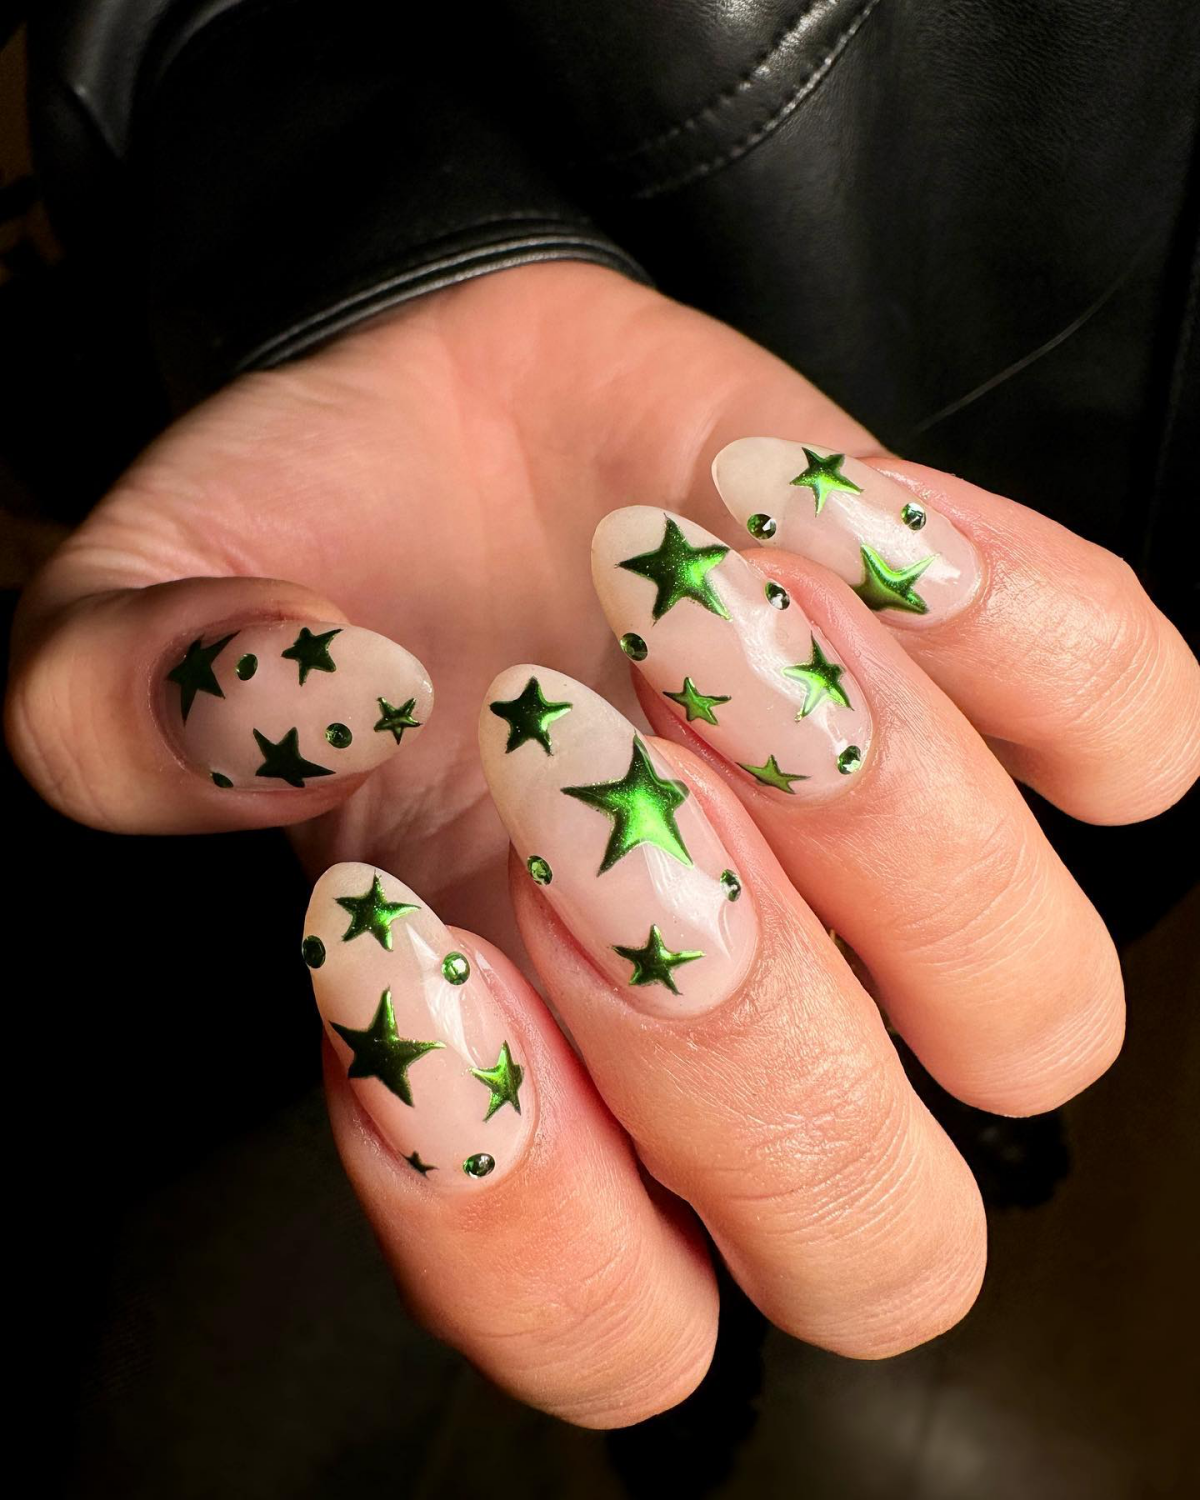 chrome green stars on nails